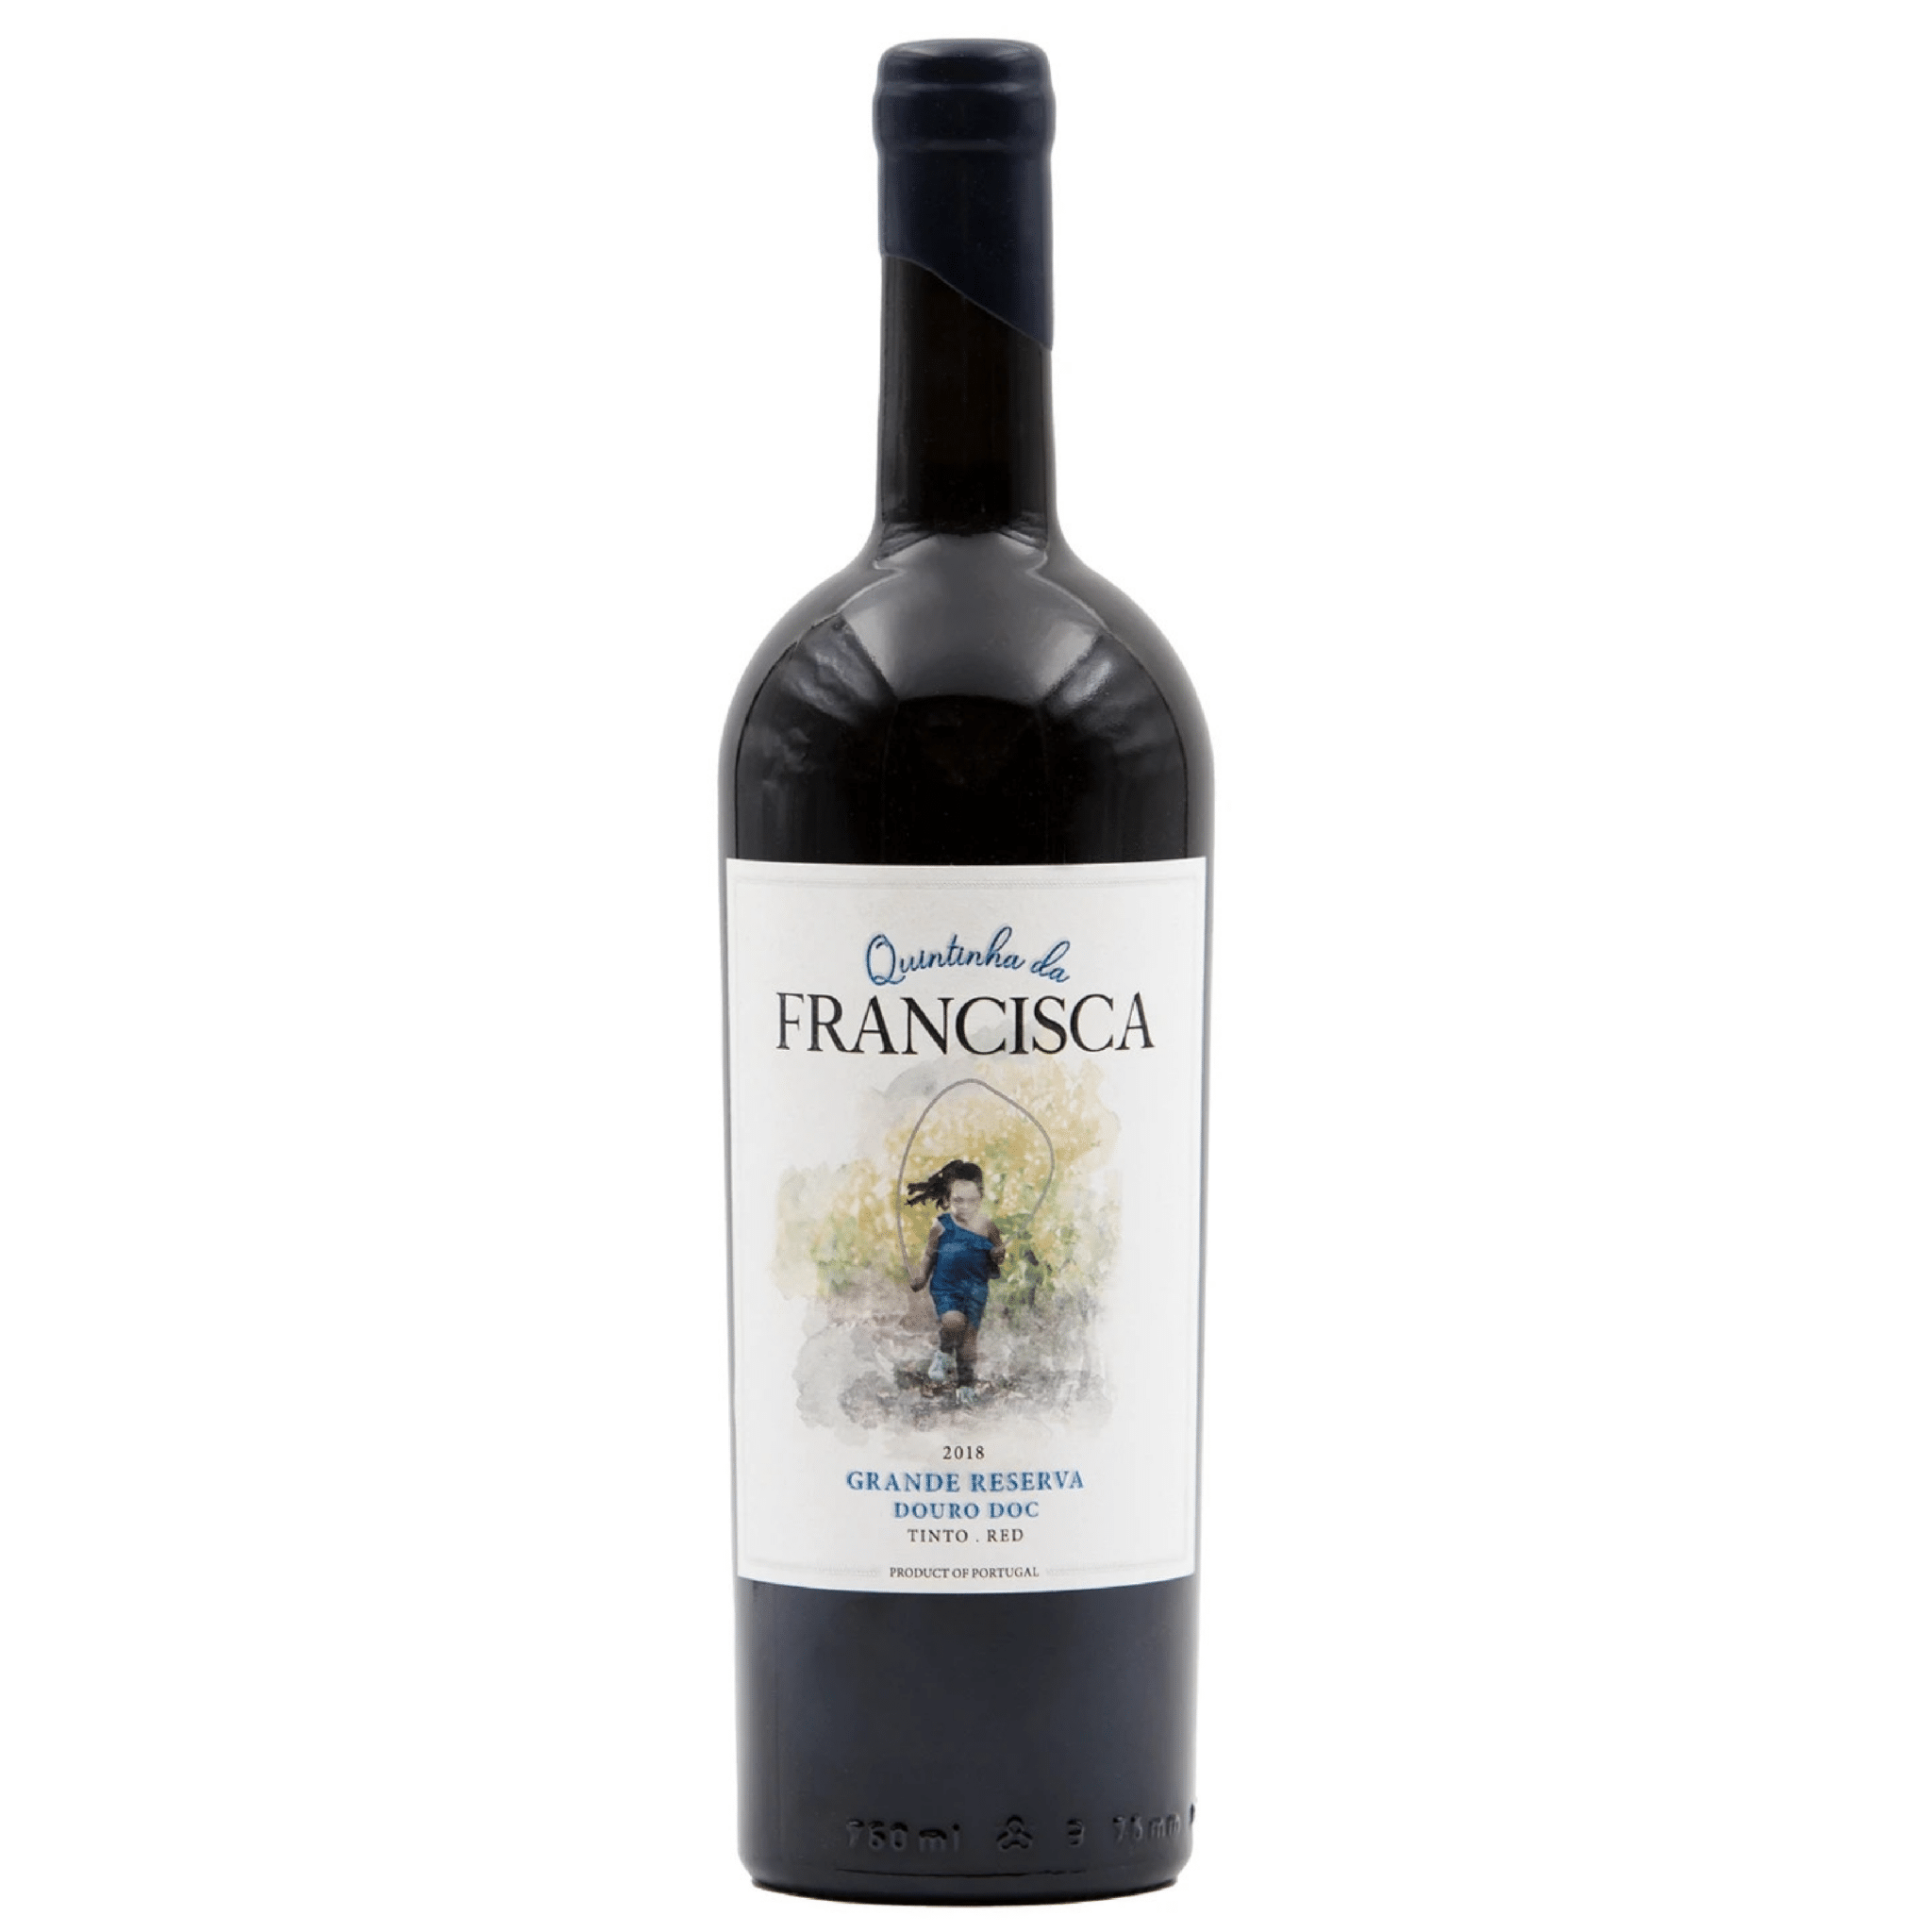 Quintinha da Francisca Grande Reserva 2018 Douro wine